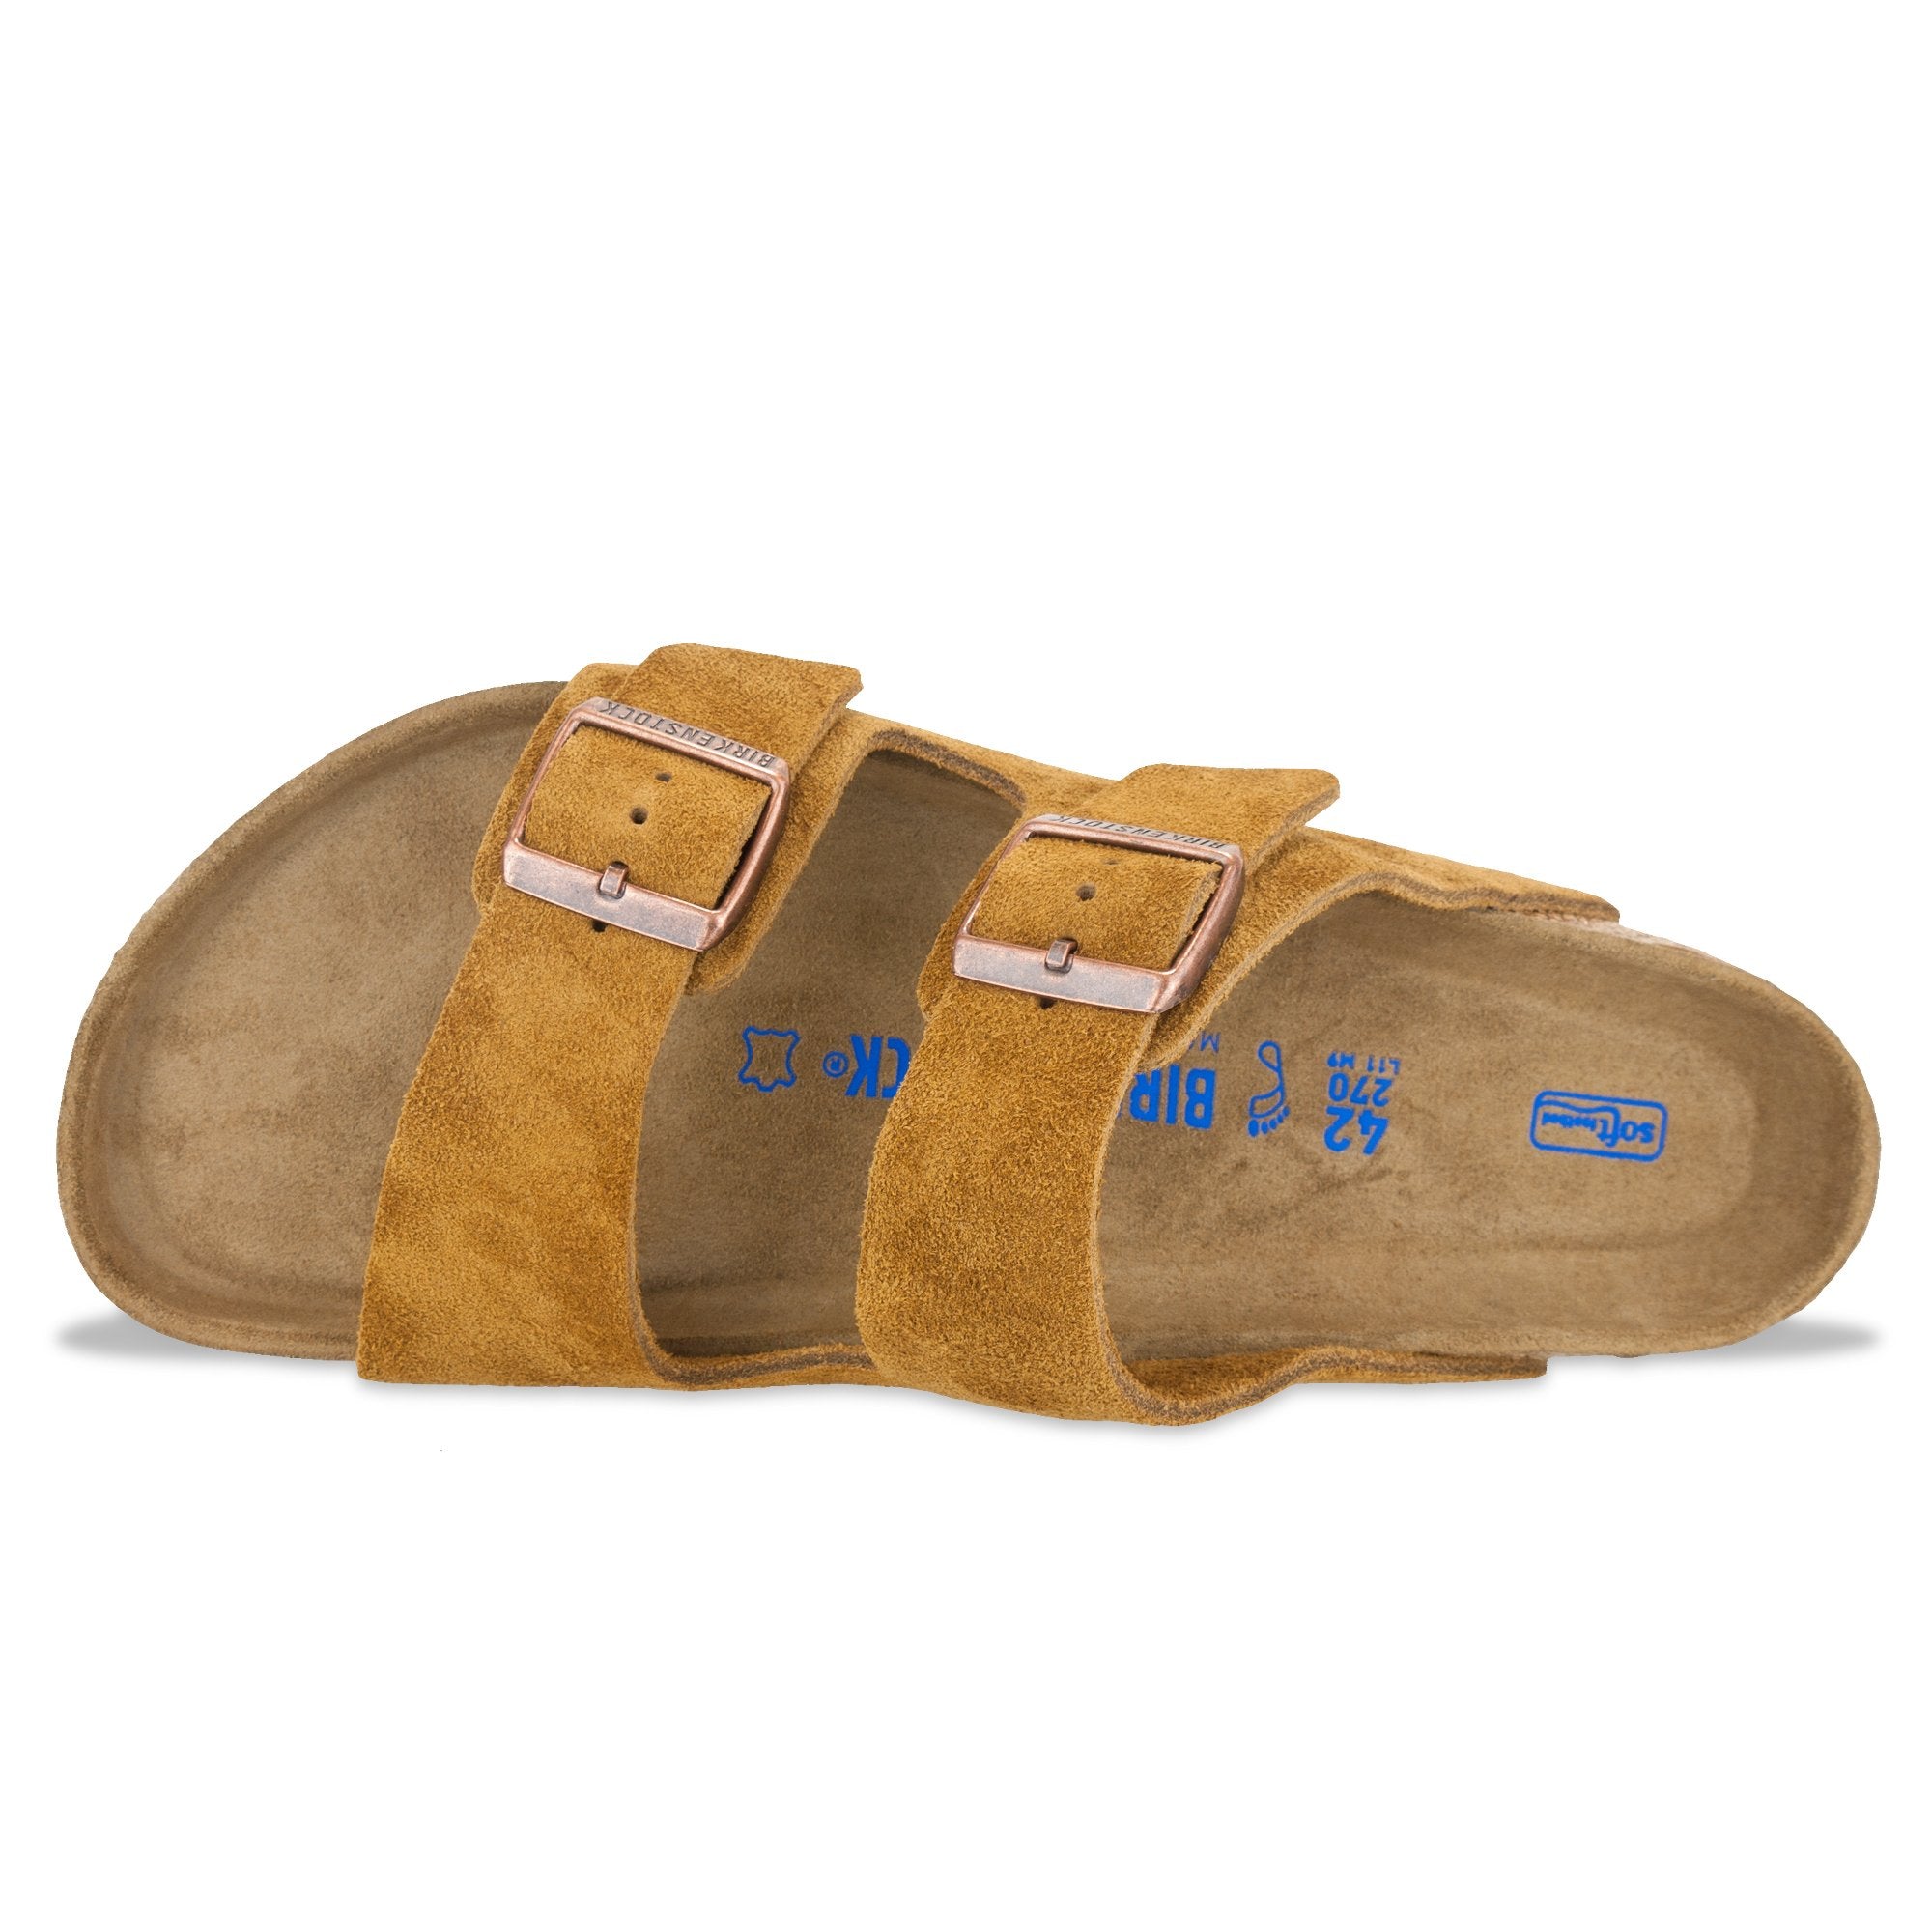 Birkenstock Arizona SFB VL Sandals - Mink Suede